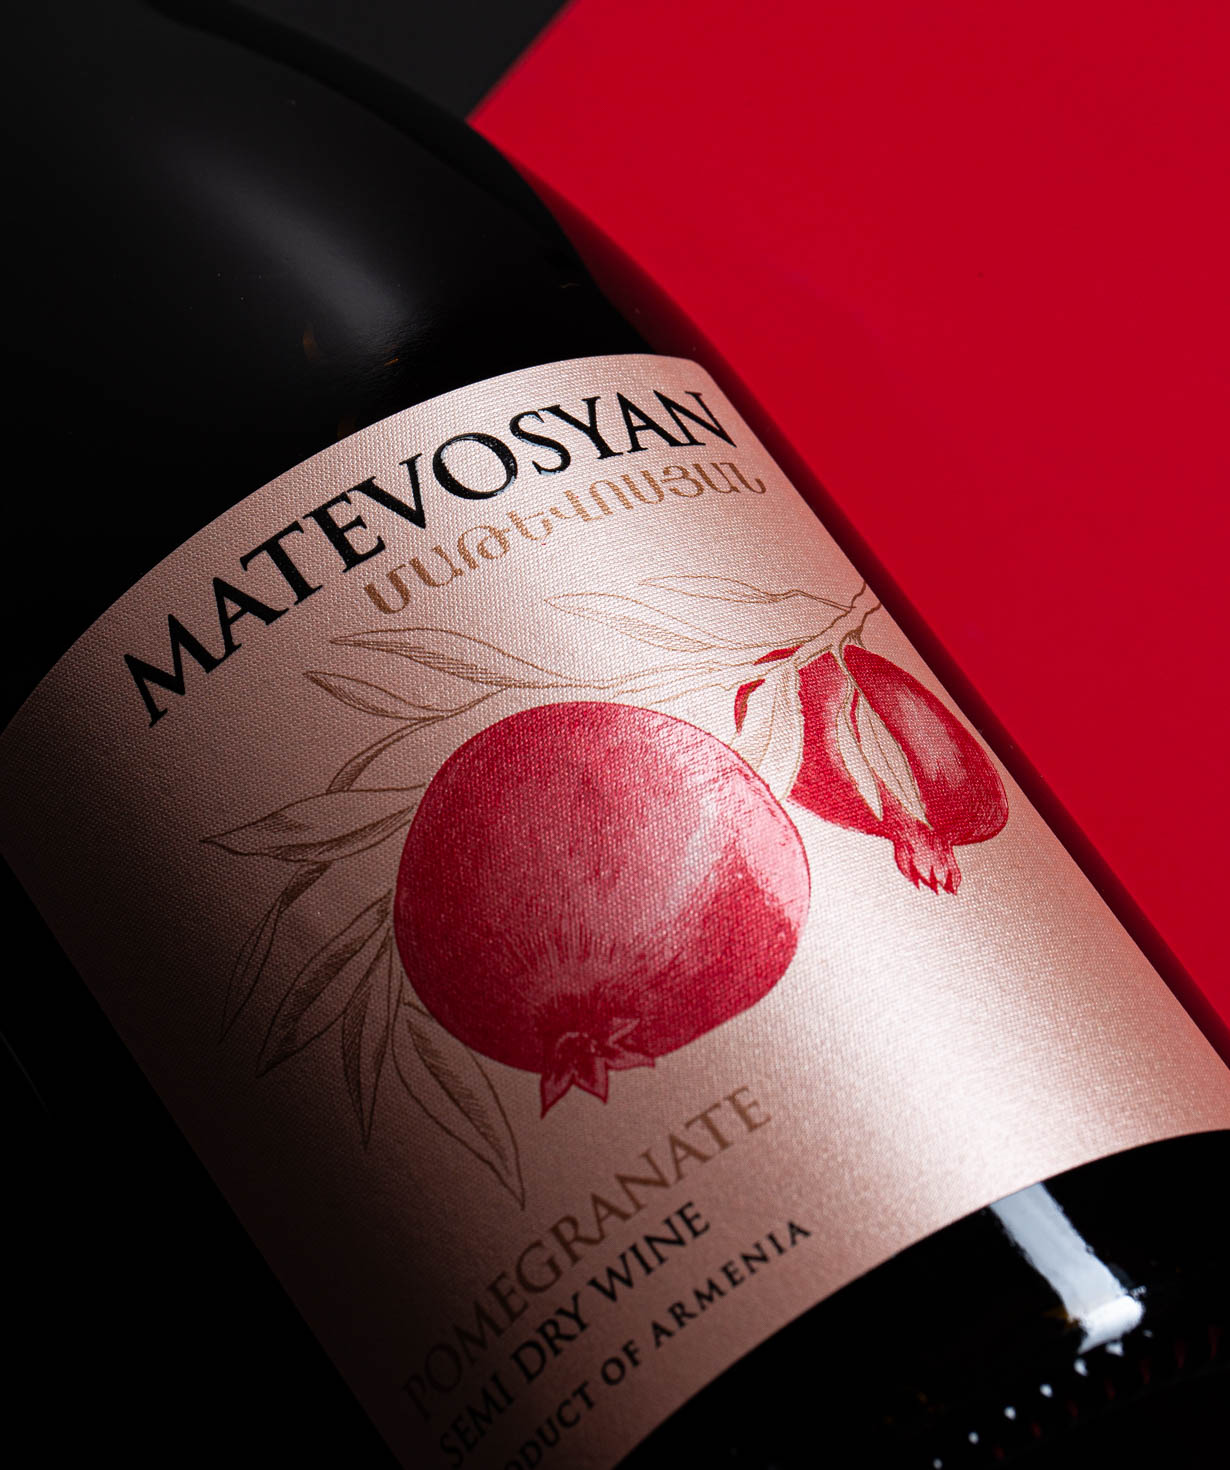 Вино «Matevosyan» Гранатовое, красное, полусухое, 9%, 750 мл